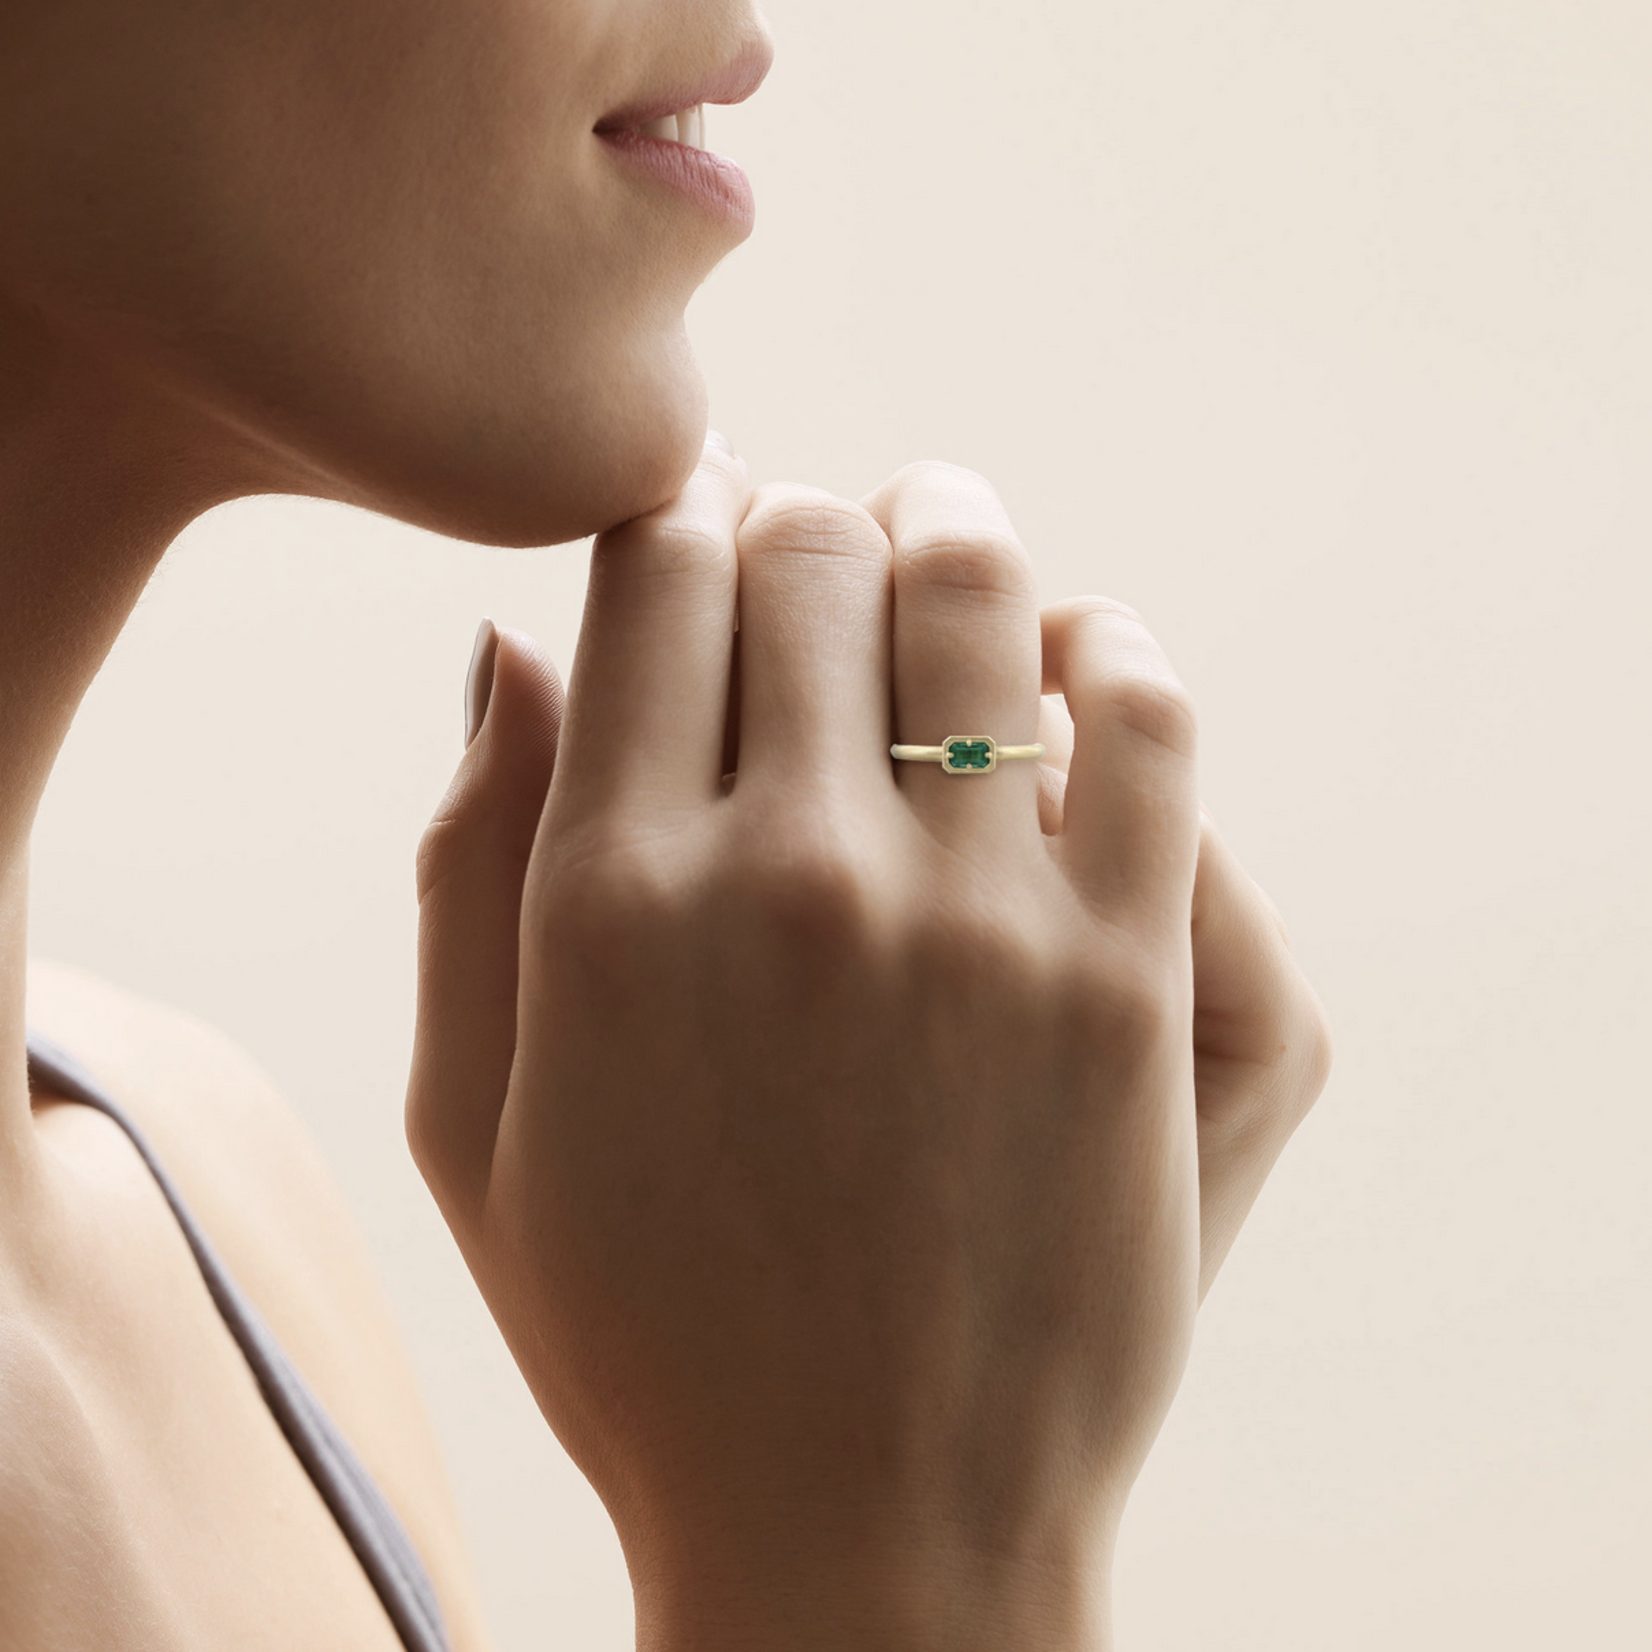 Baxter Moerman Anika Ring with 0.25ct Emerald